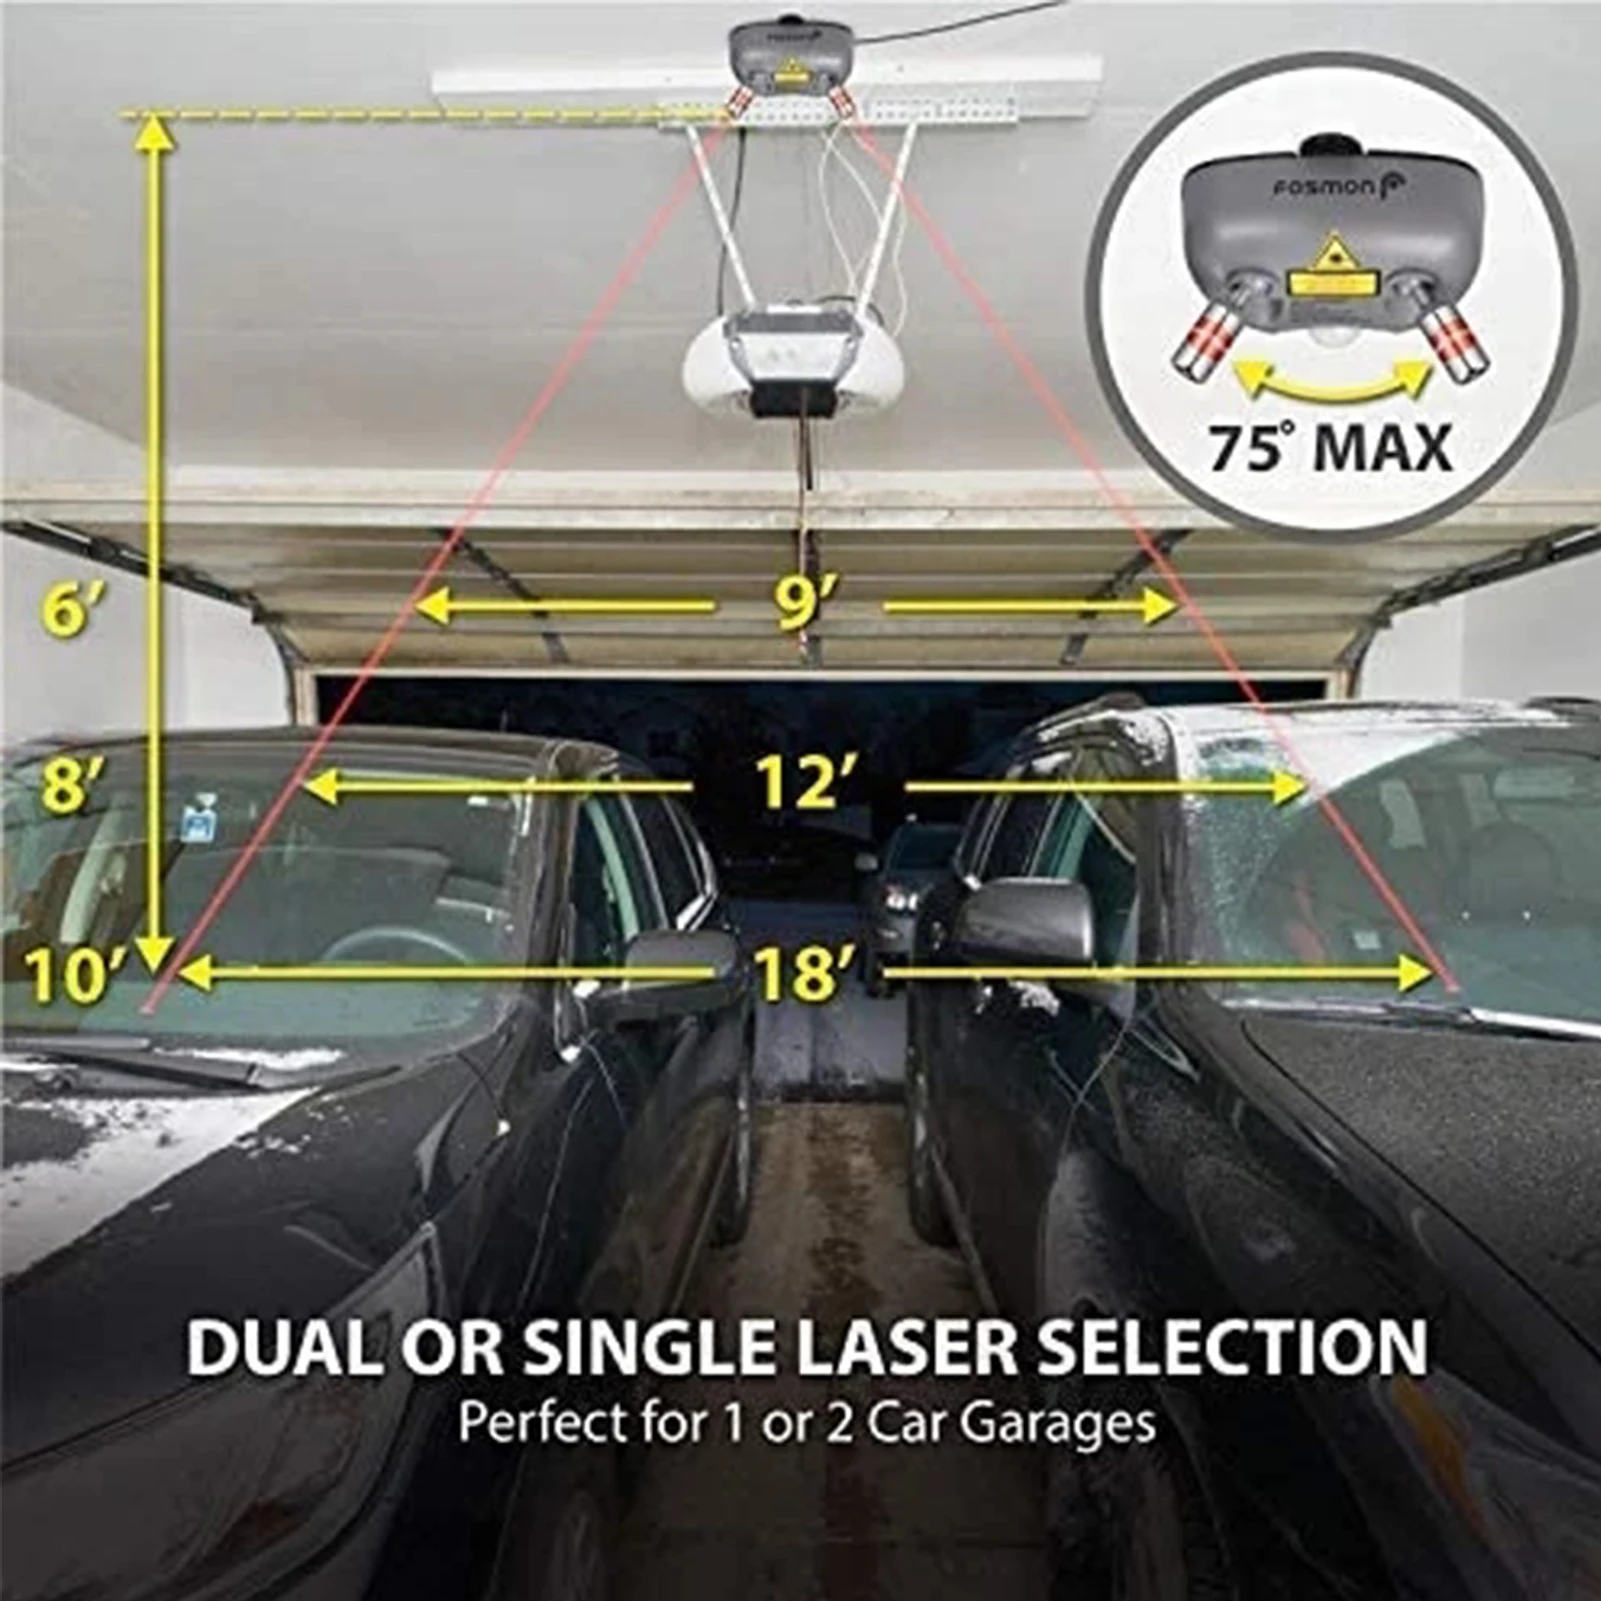 Chamberlain Home Laser Garage Parking Assist Sensor Aid Guide Stop Light System 